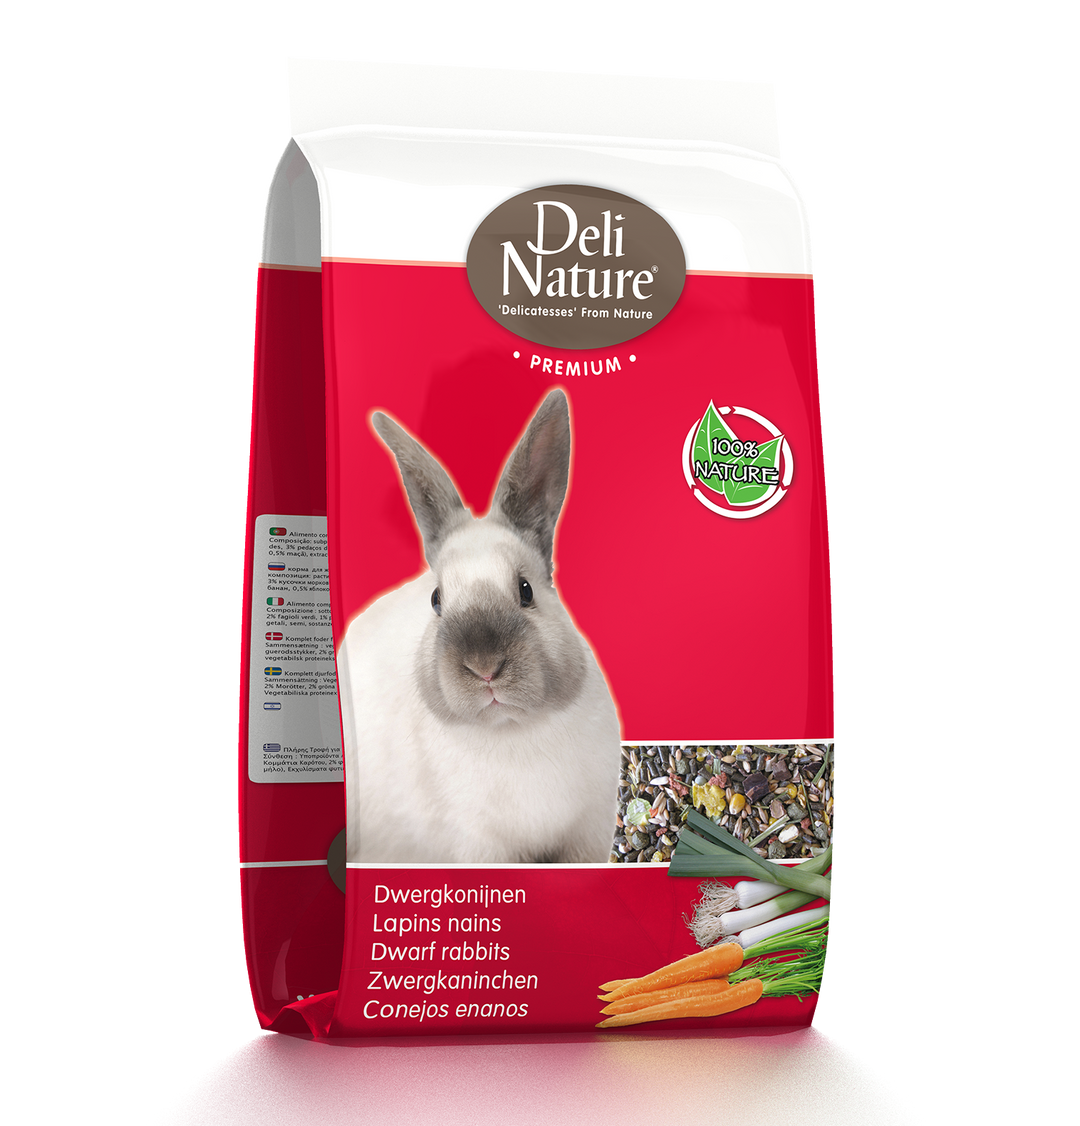 Deli Nature Premium Dwarf Rabbits